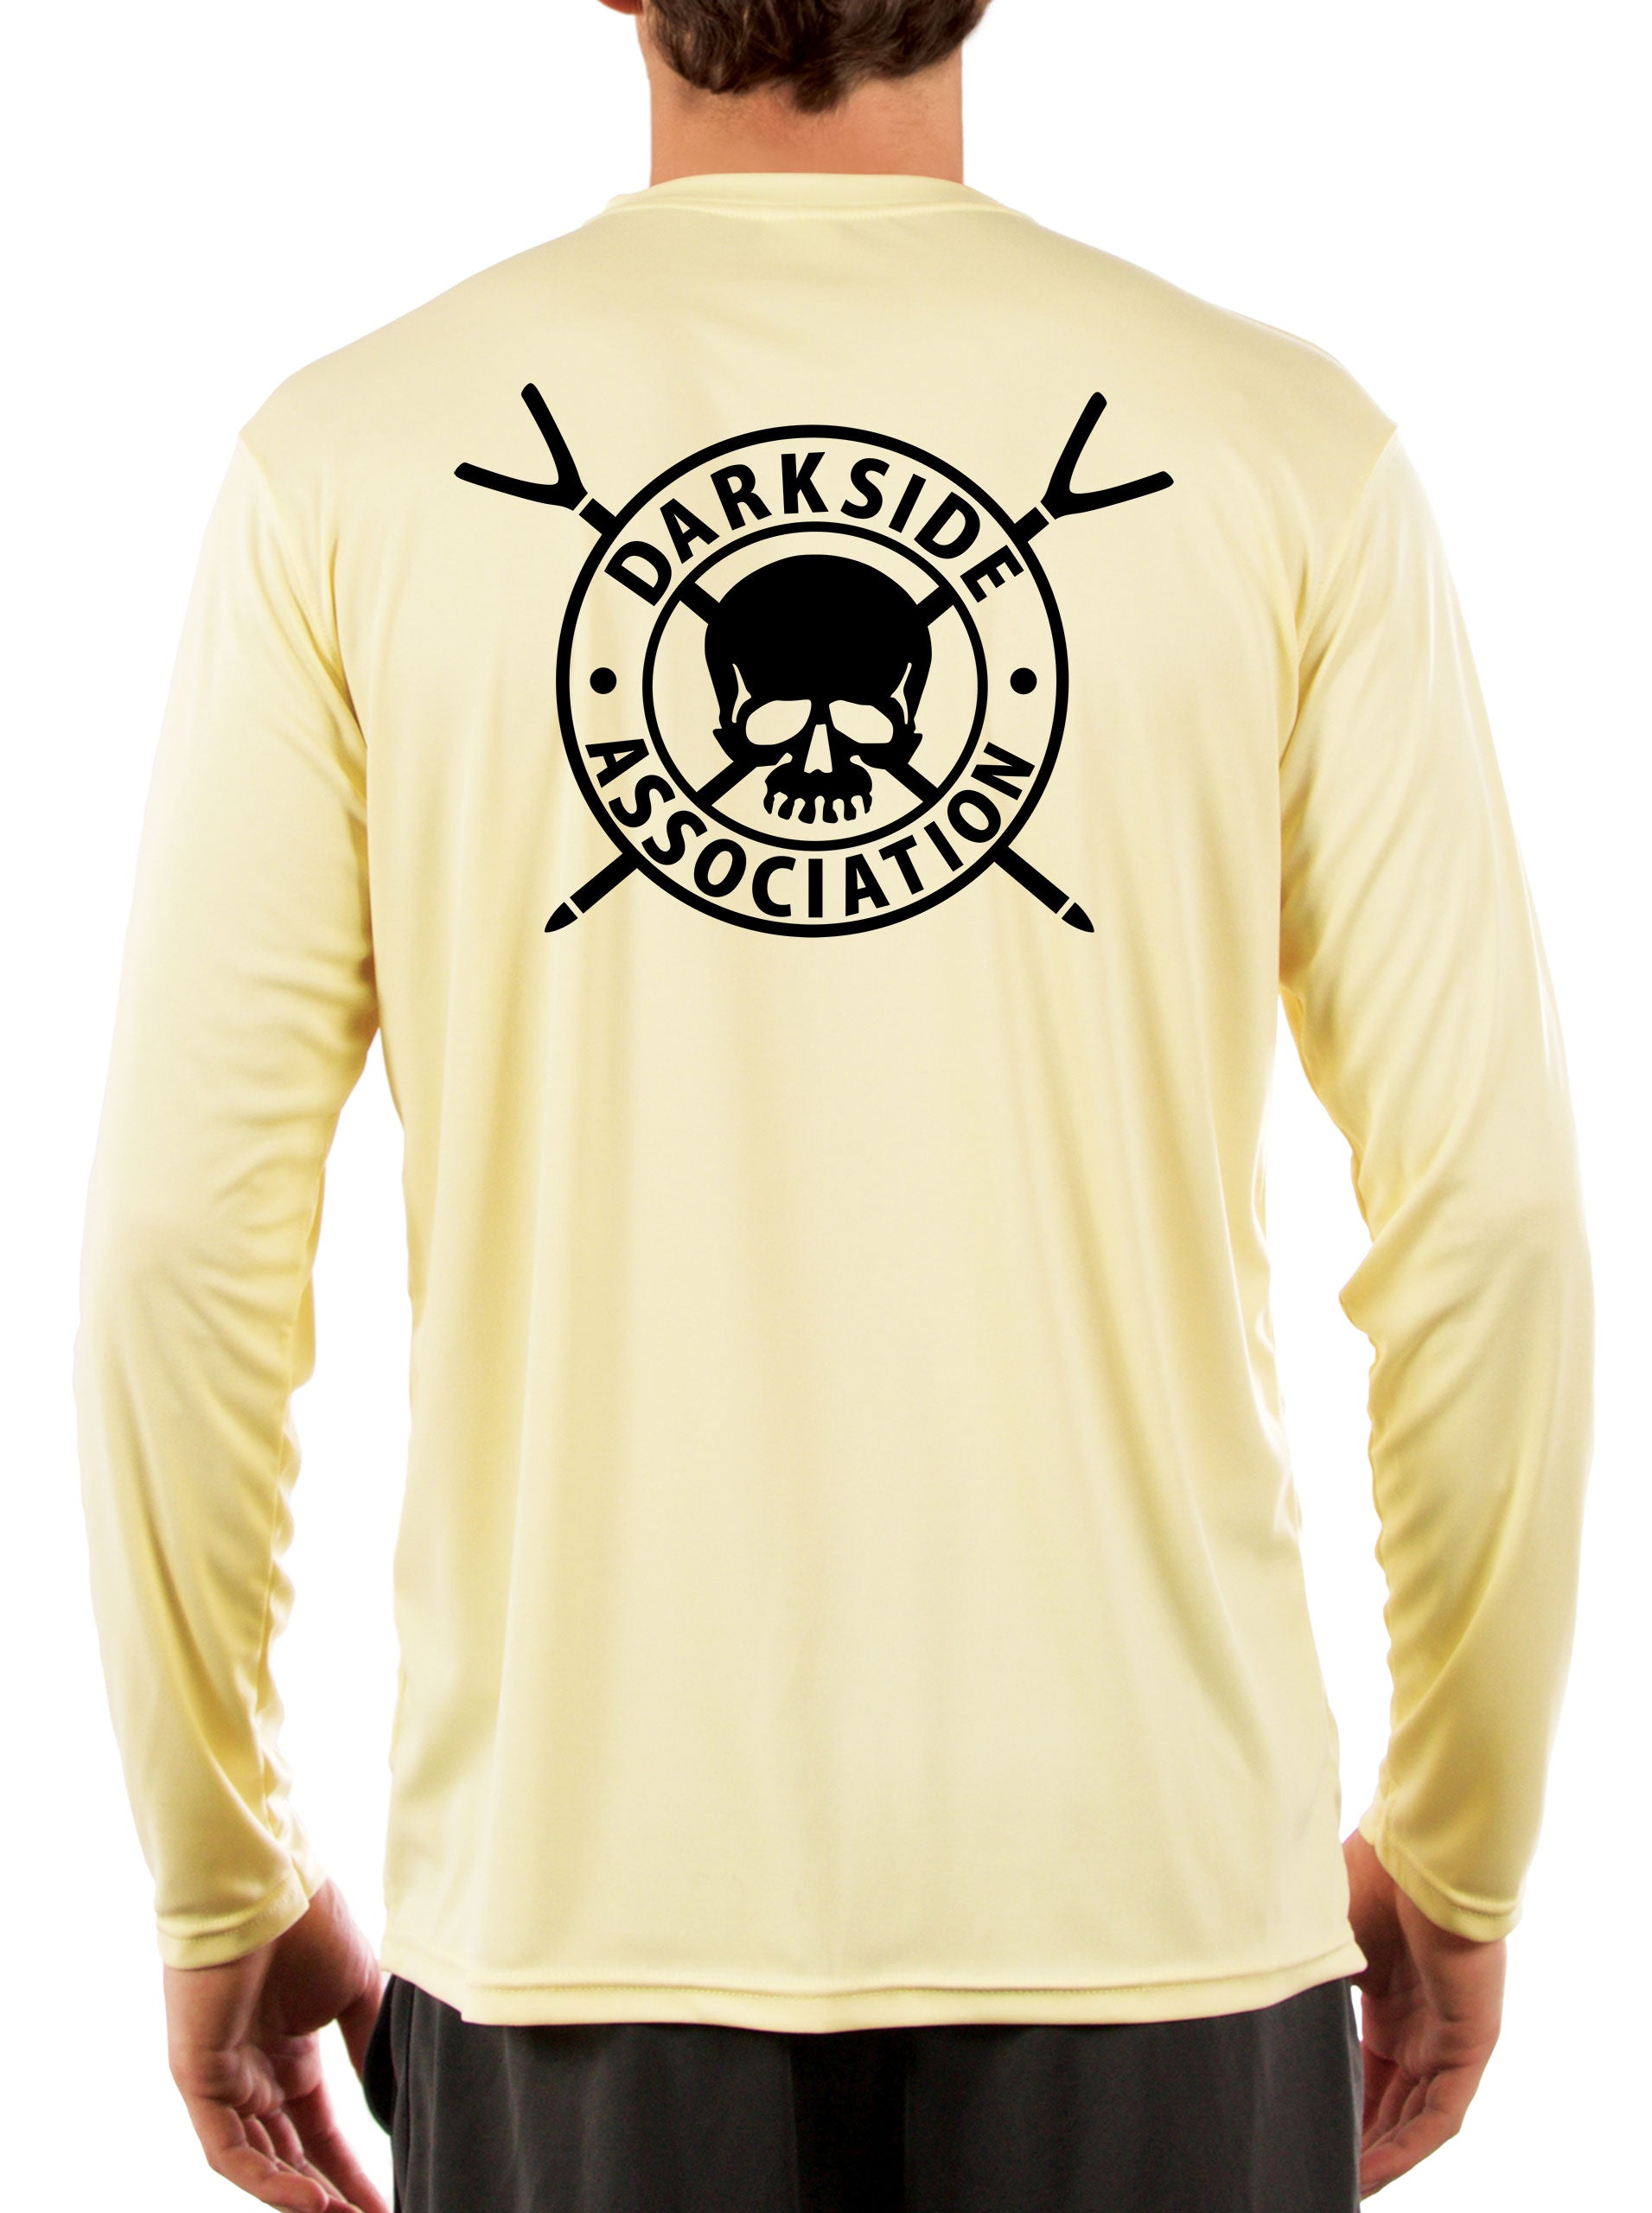 Darkside Association Skiff Fishing Shirts for Men Extra Large / Yellow